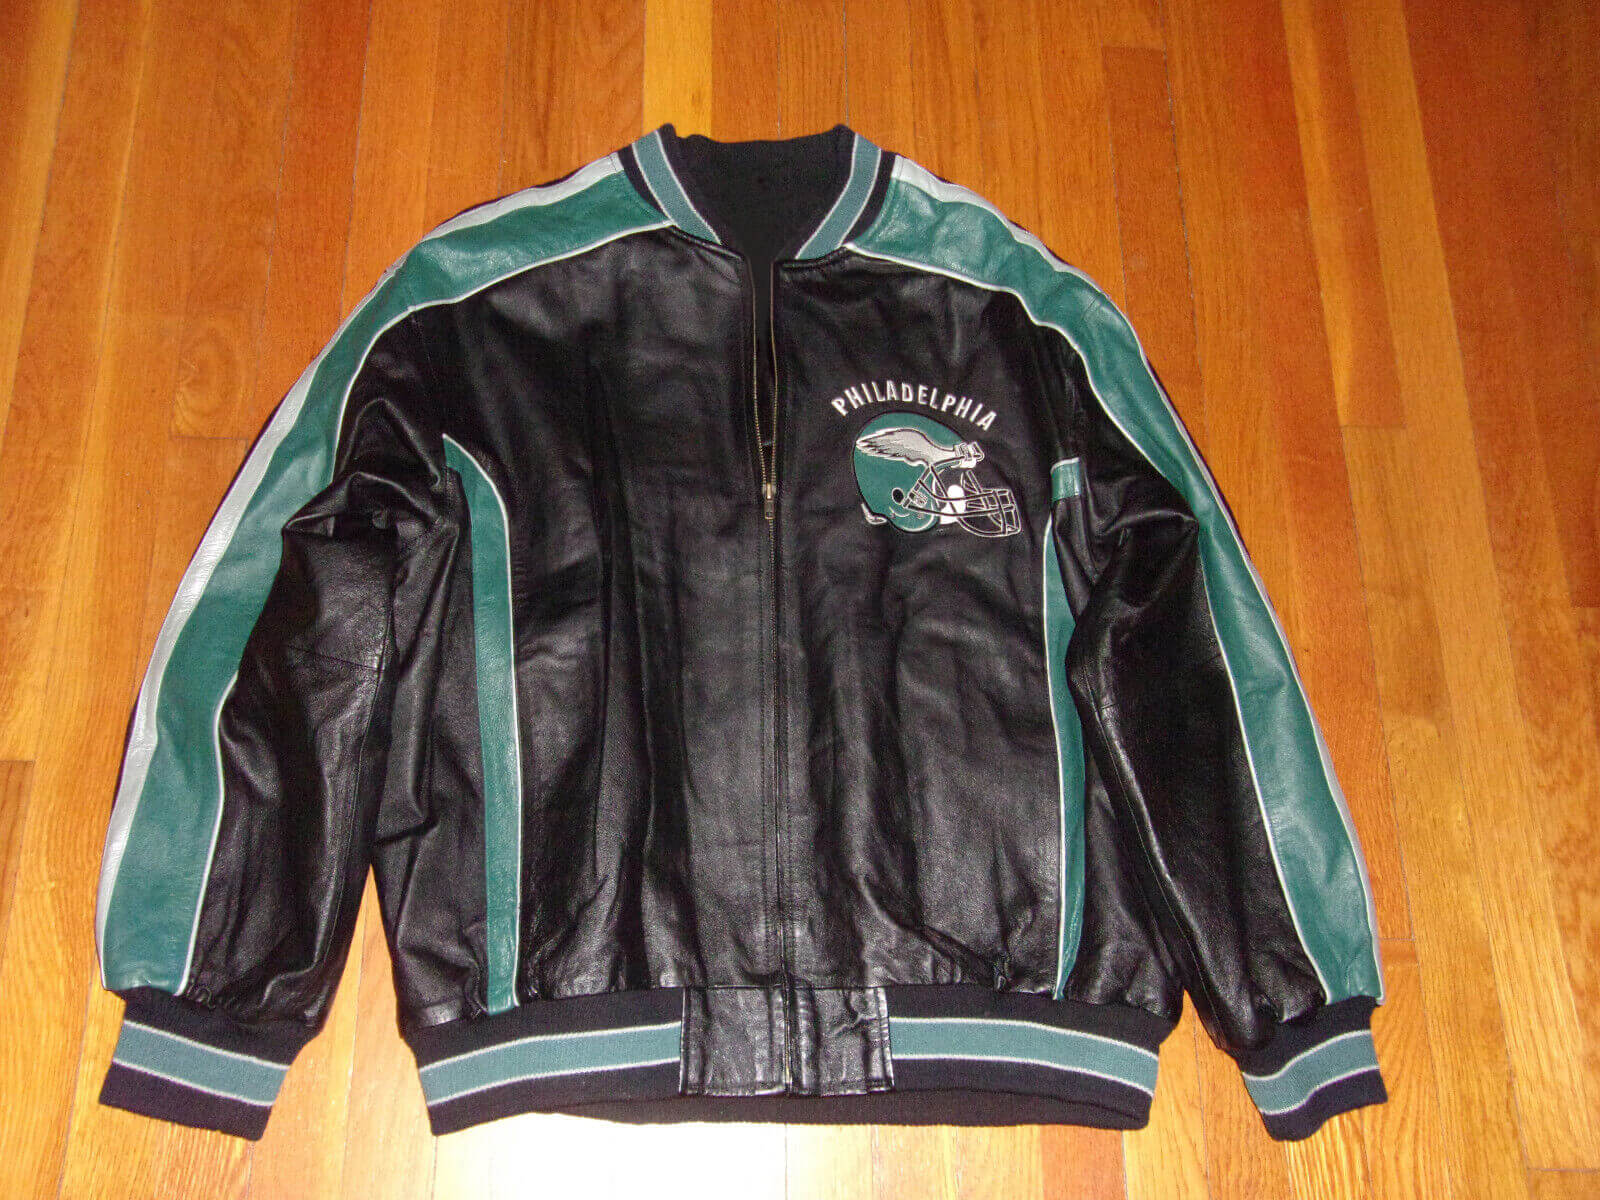 Vintage NFL Philadelphia Eagles Football Leather Jacket - Maker of Jacket